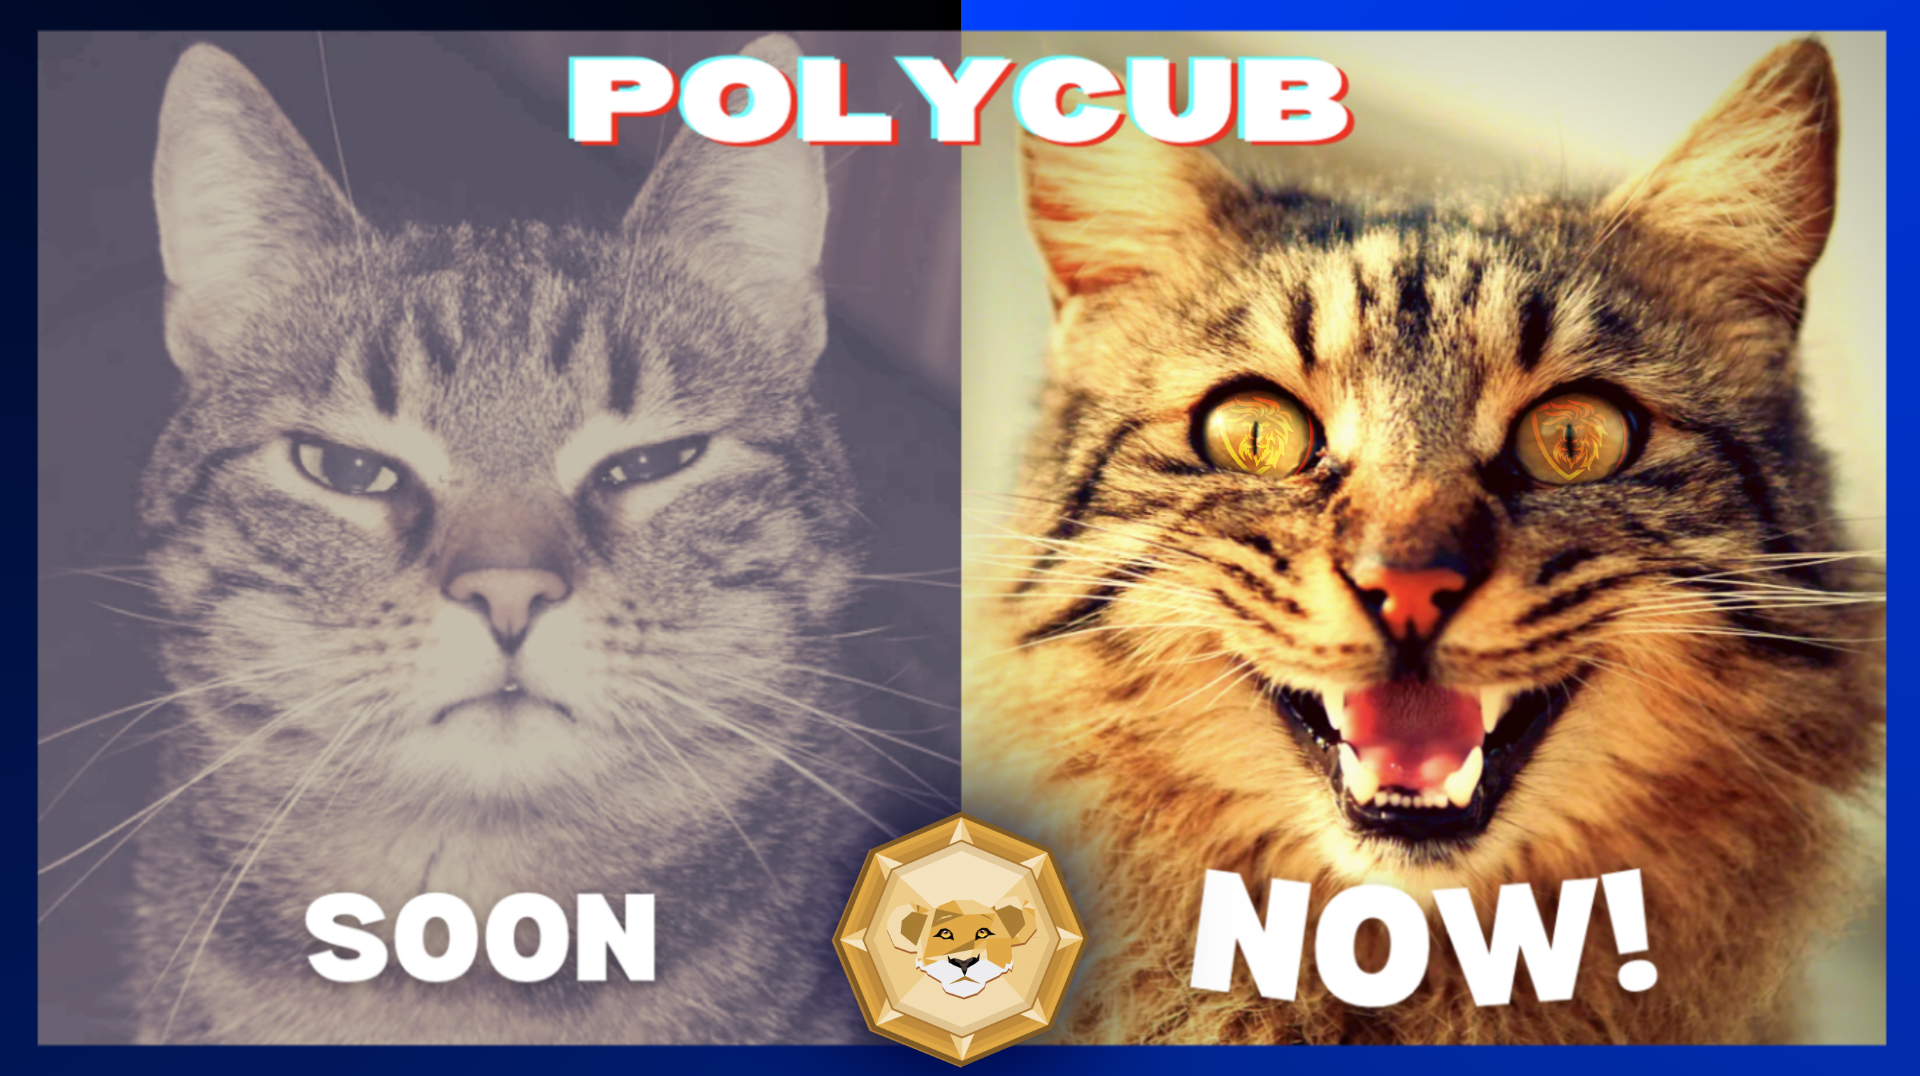 polycubsoonowcat.jpg